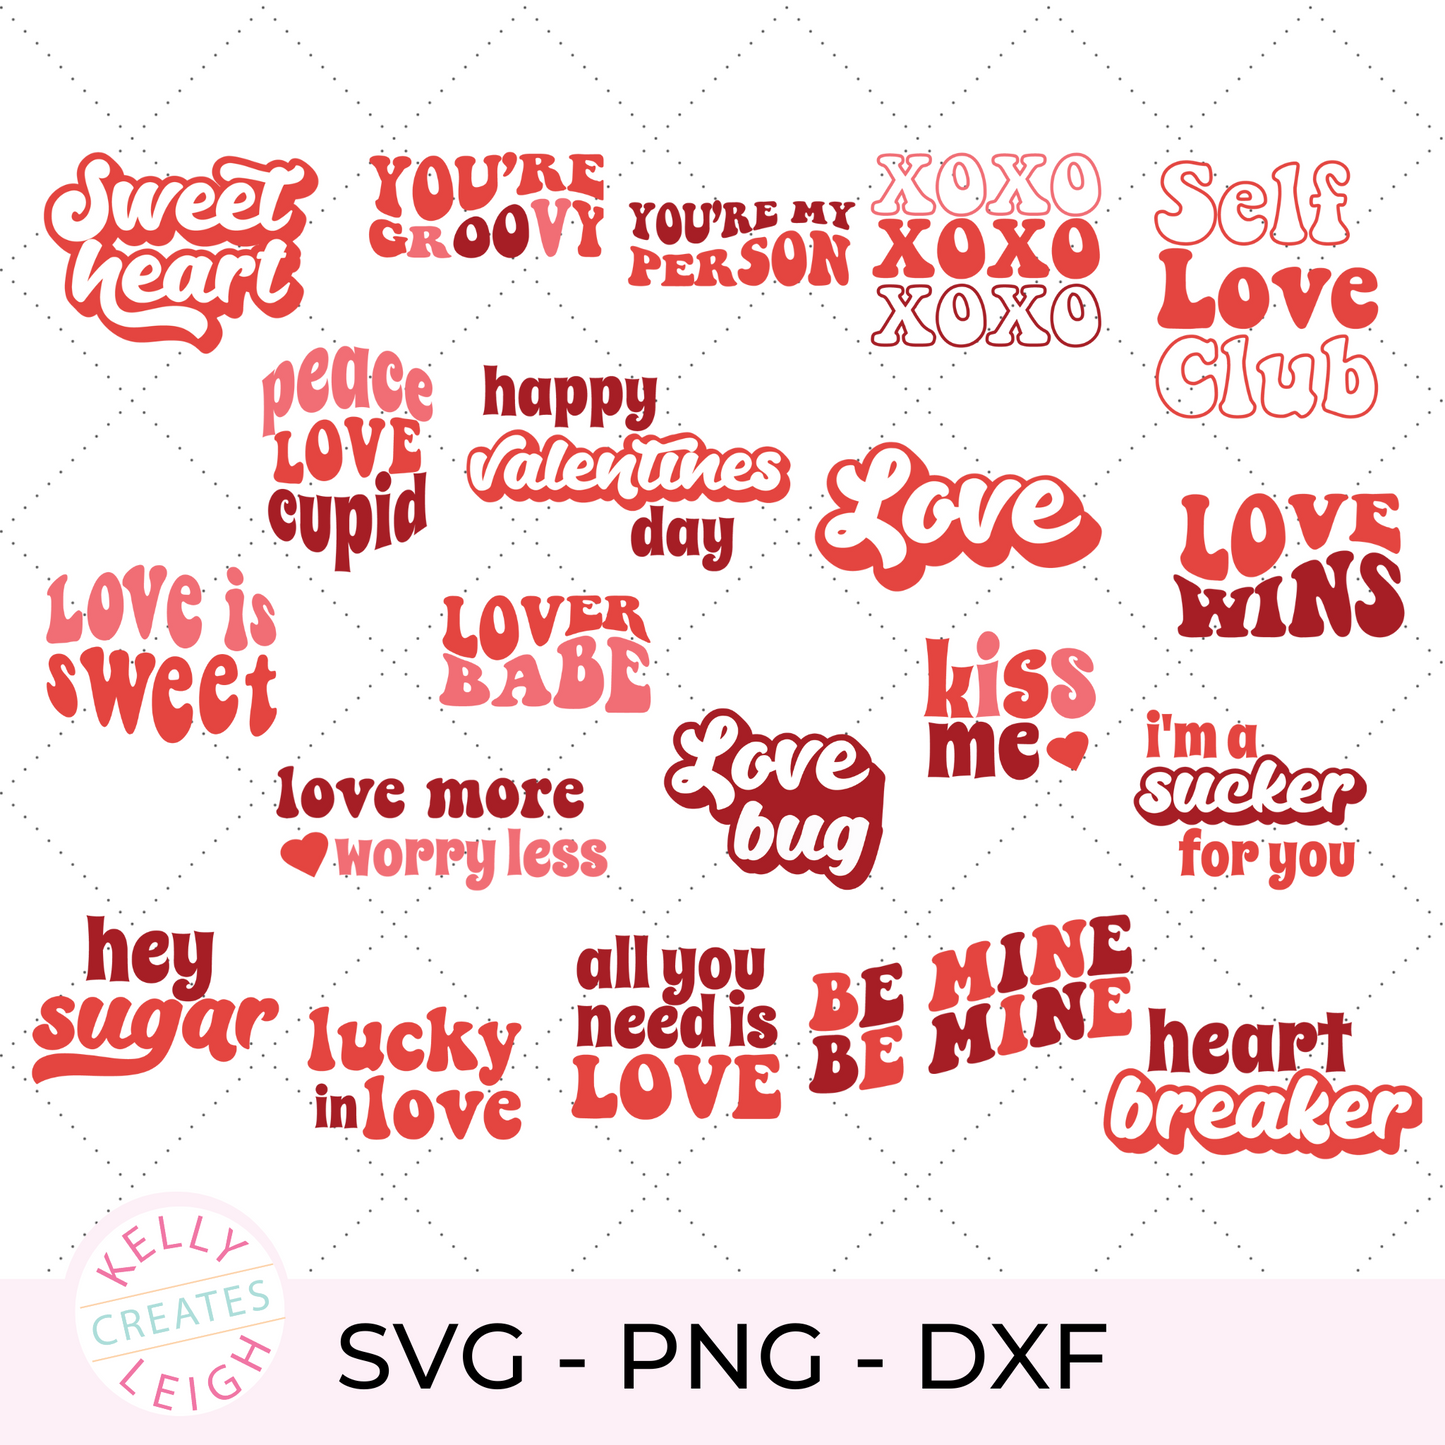 Retro Valentine SVG Bundle